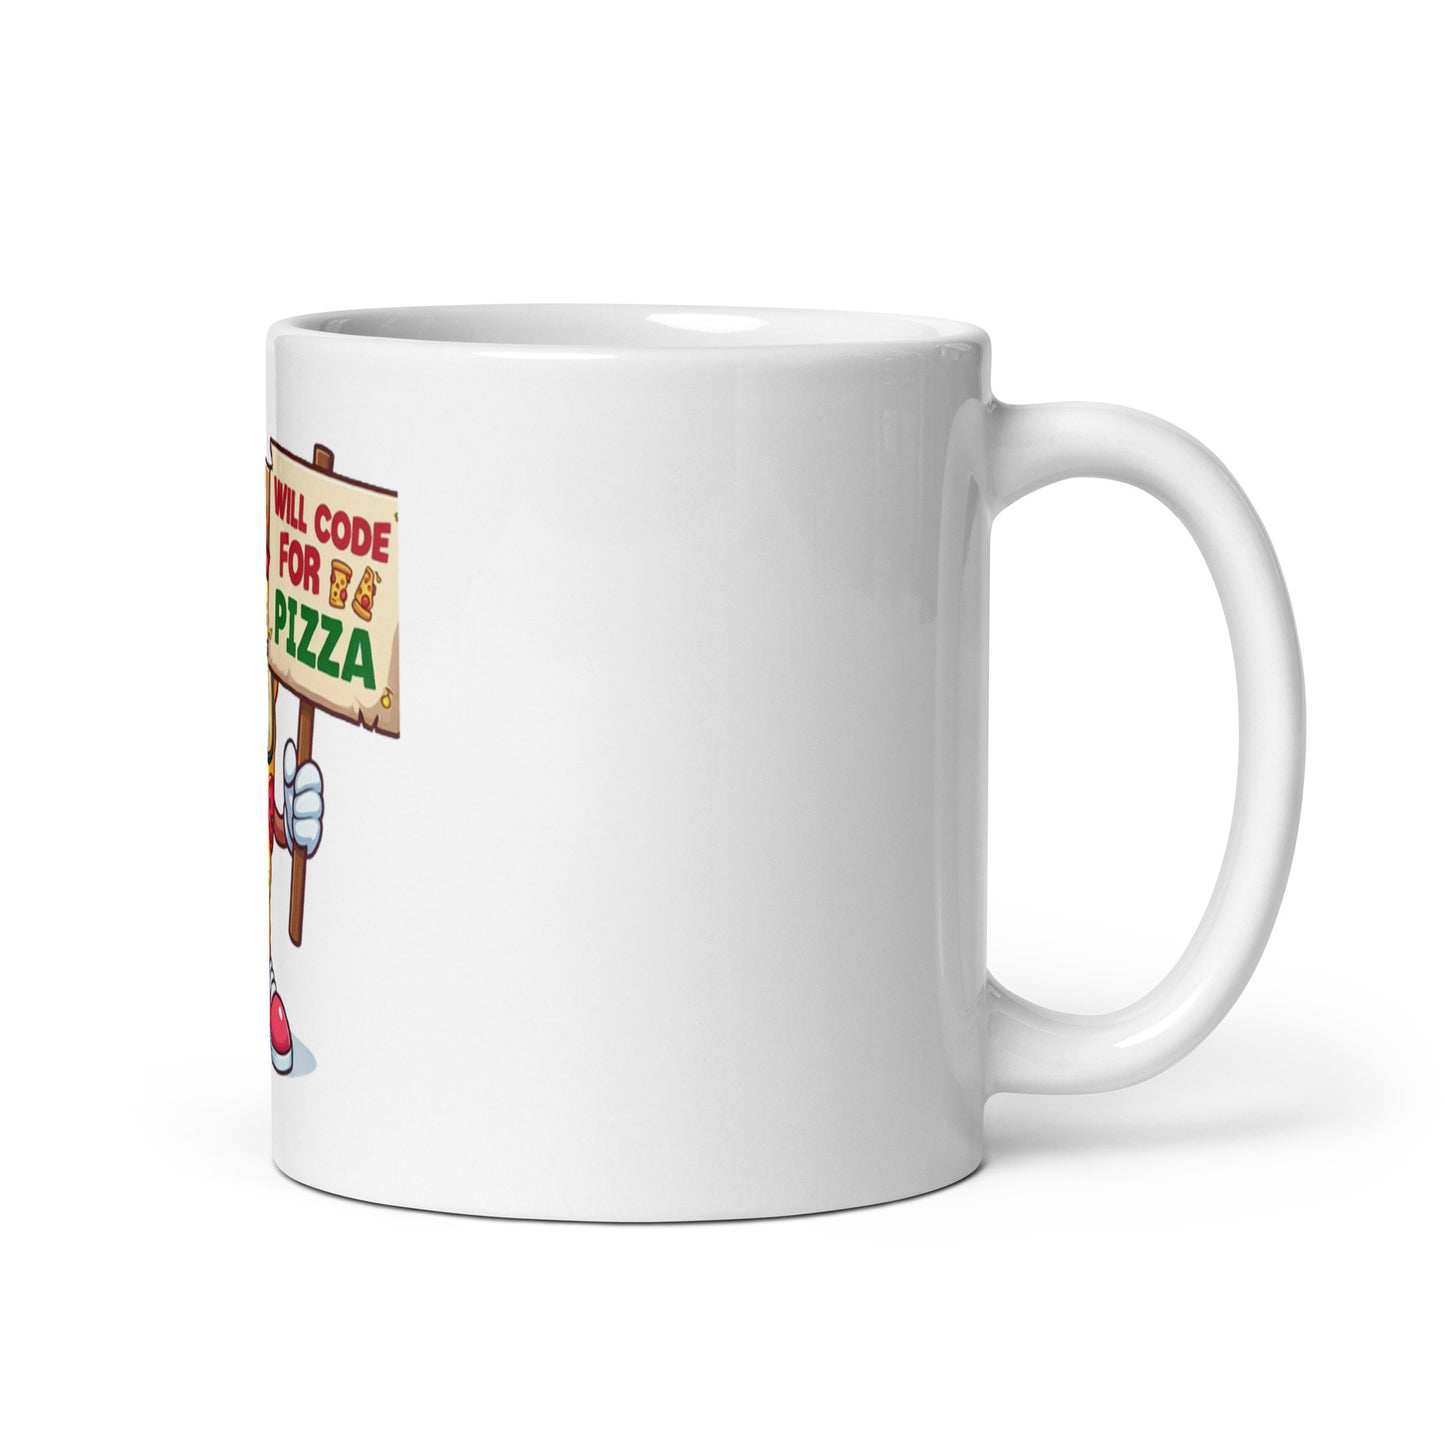 Code For Pizza mug